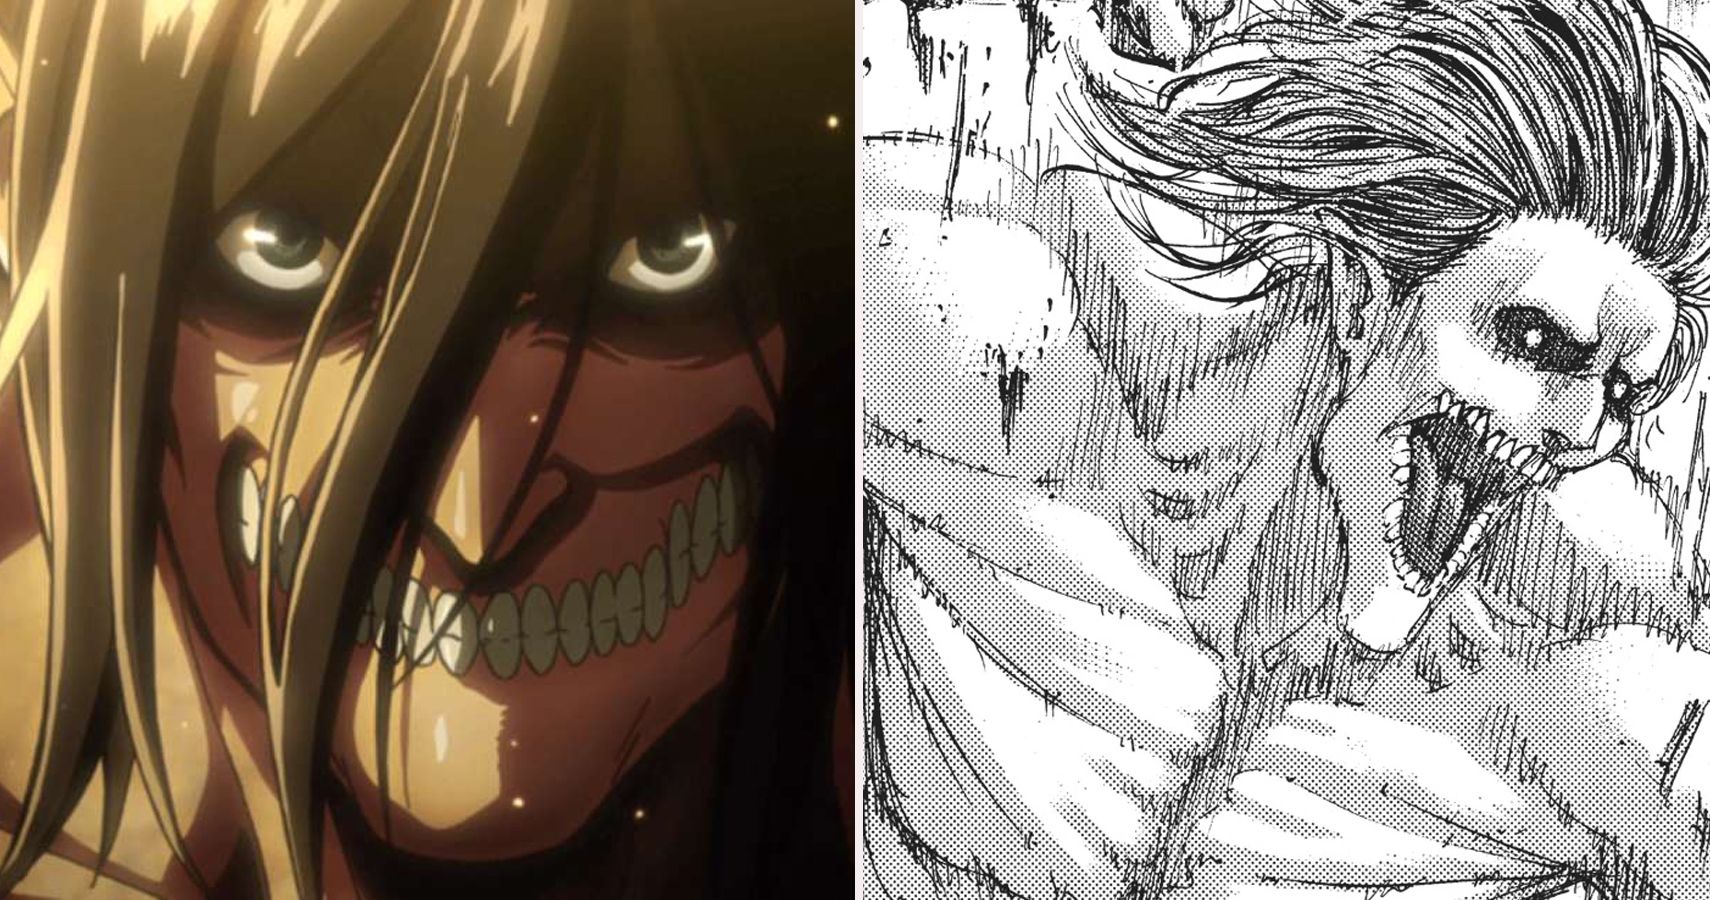 Read or Watch: Manga vs Anime